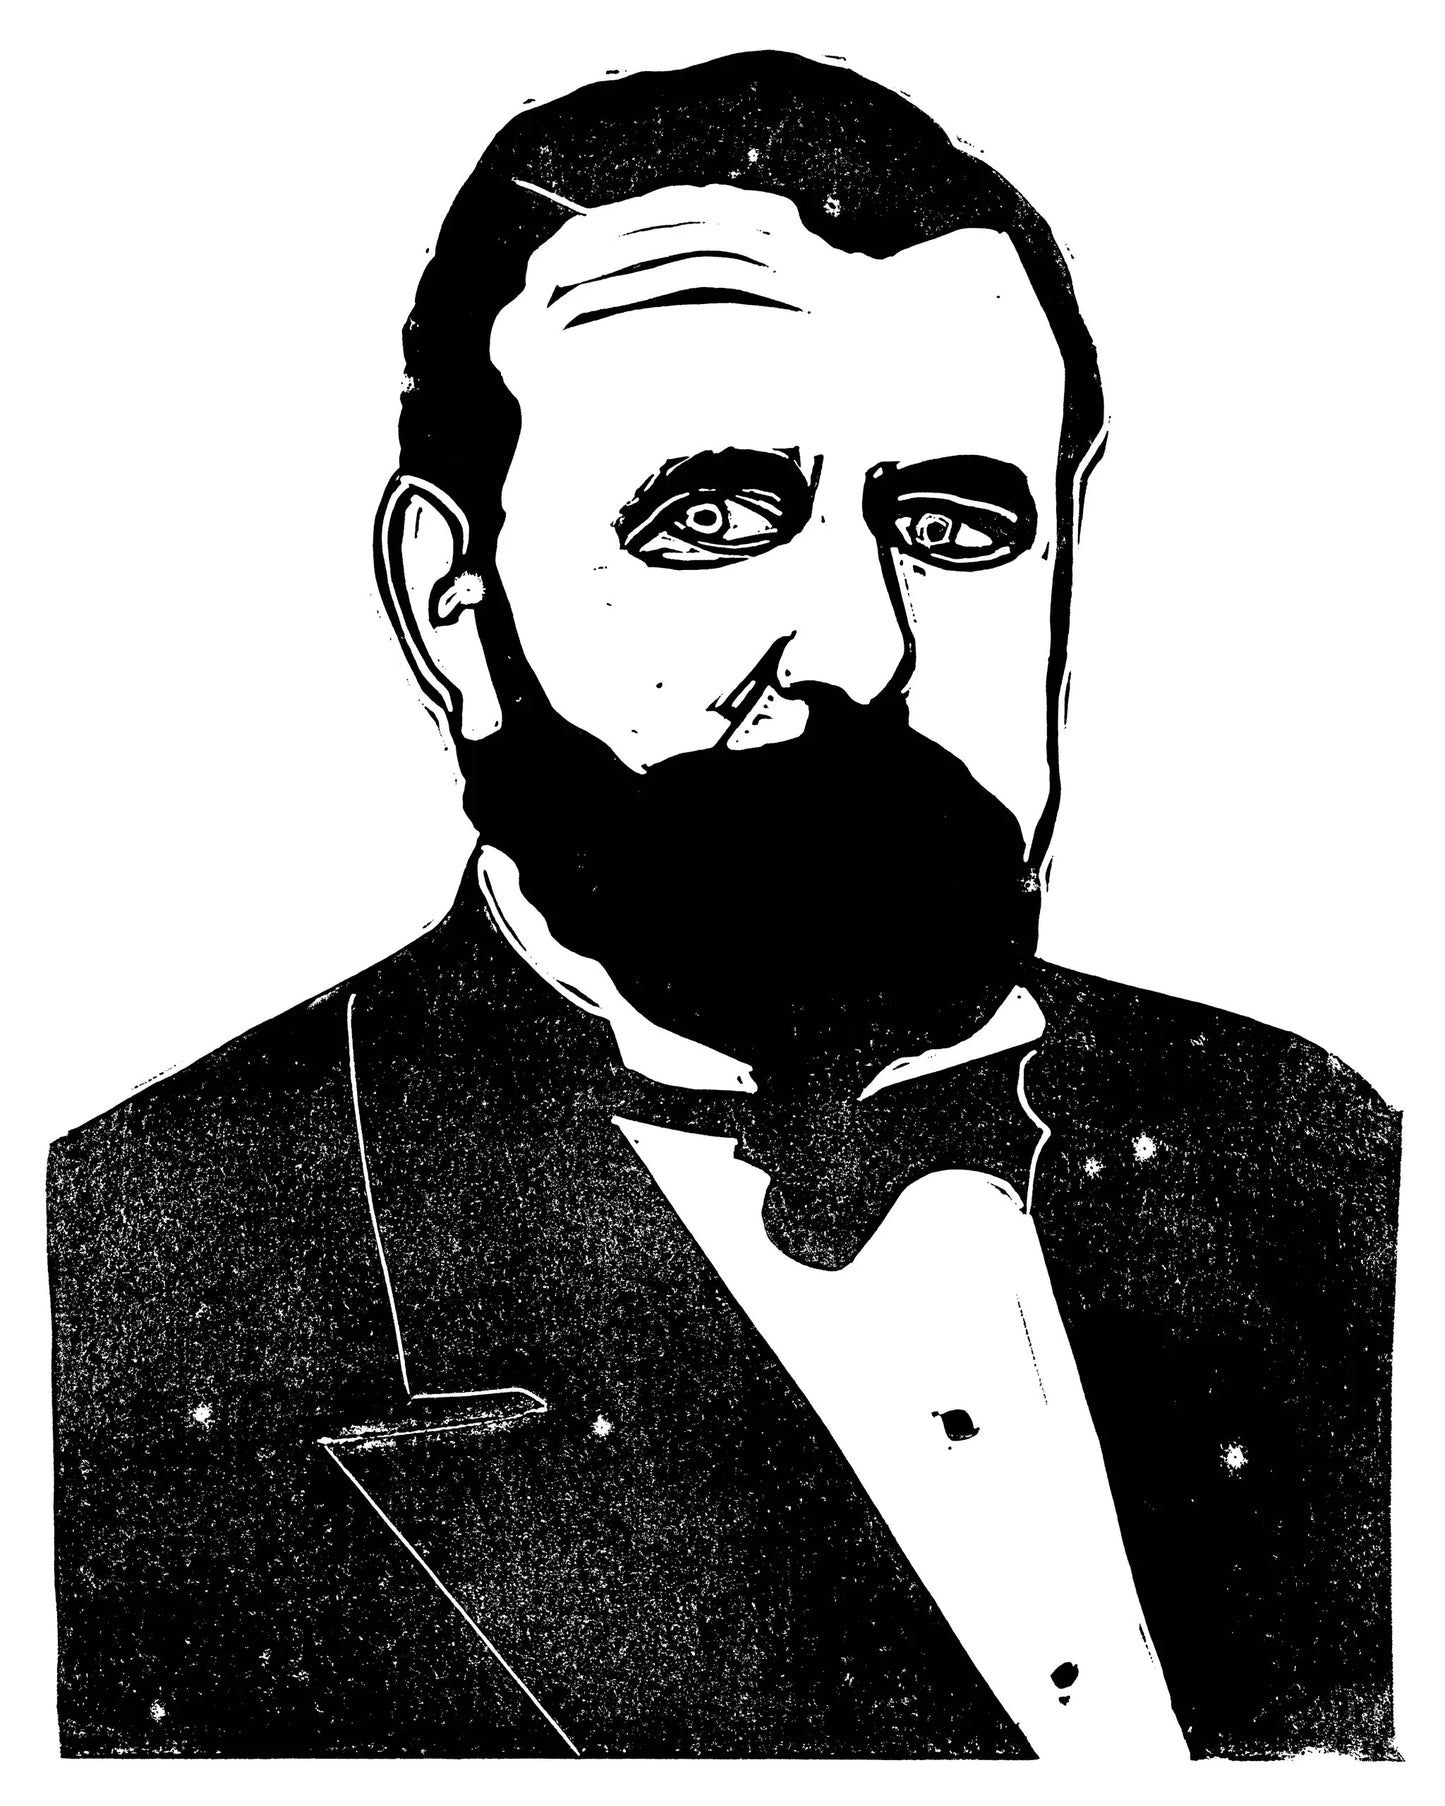 Ulysses S. Grant print for Brent